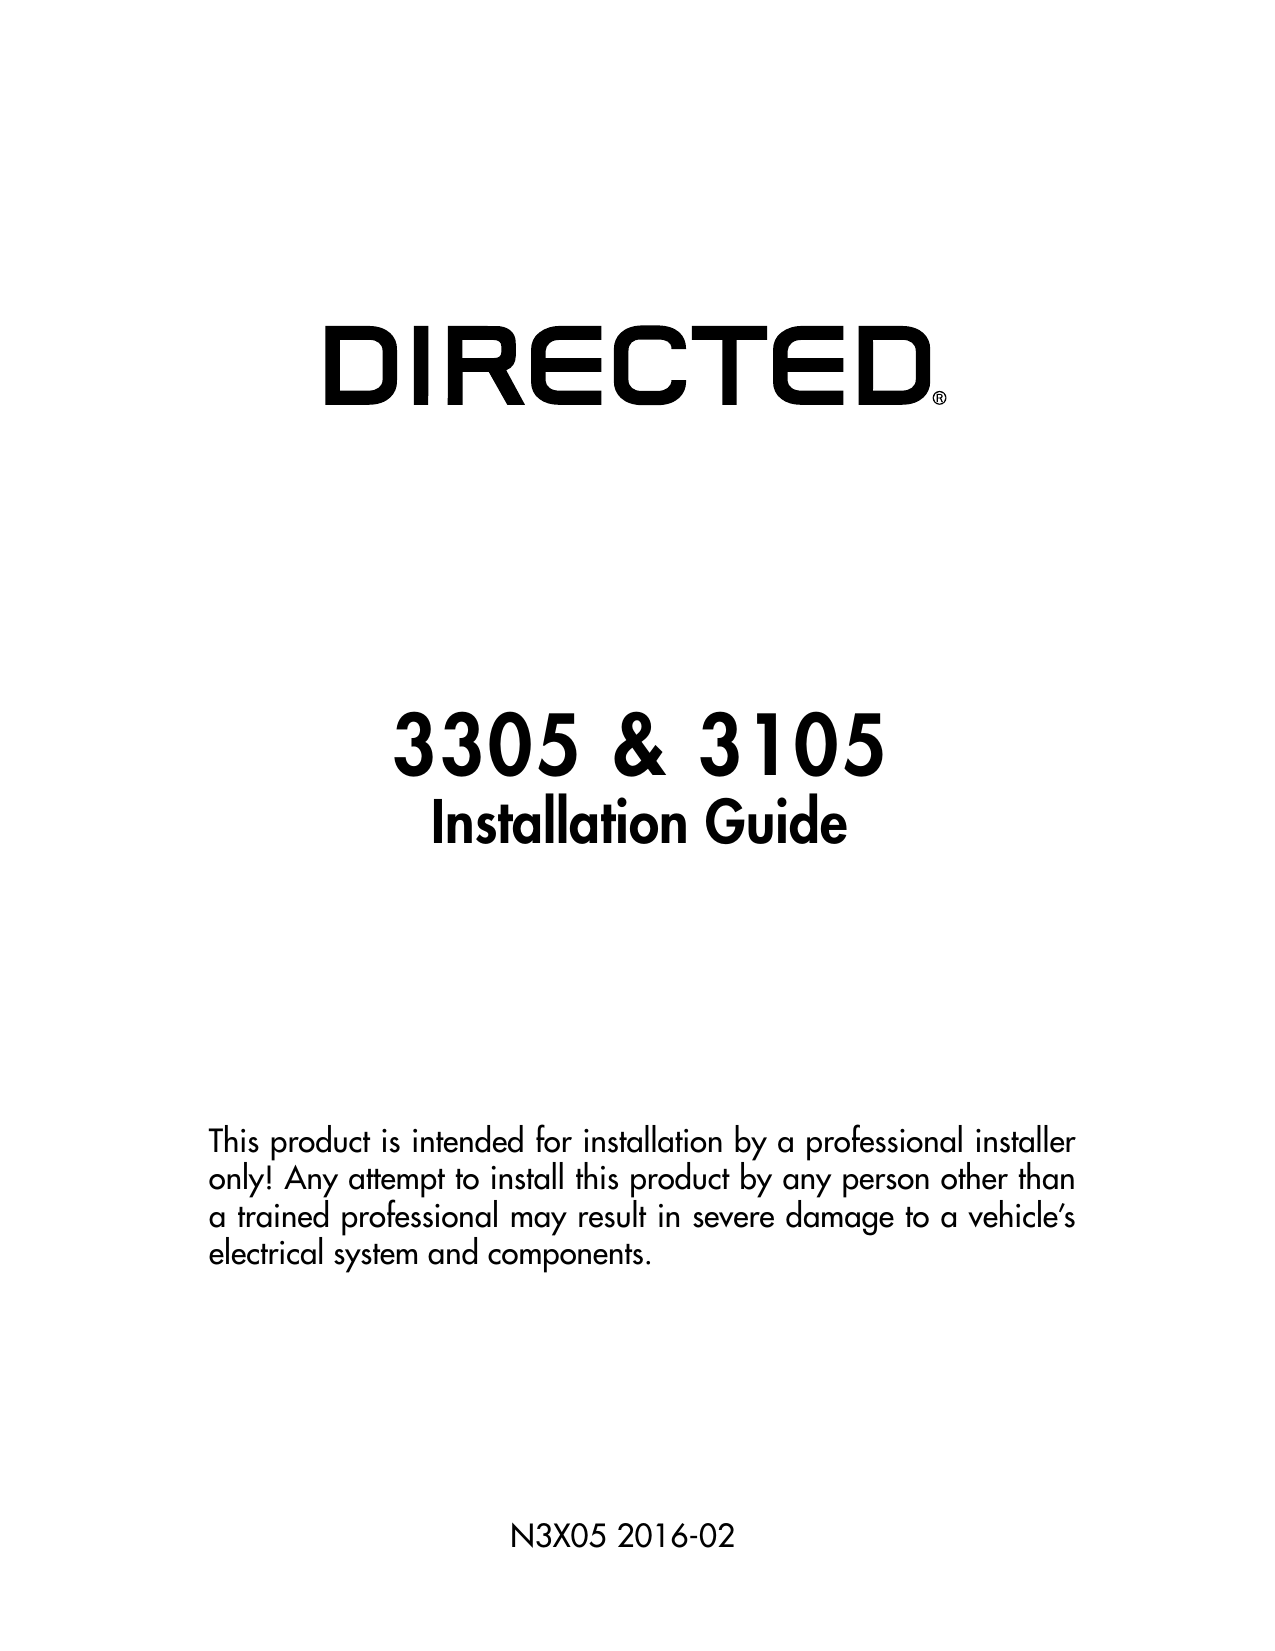 directed-3305-3310-installation-manual-manualzz